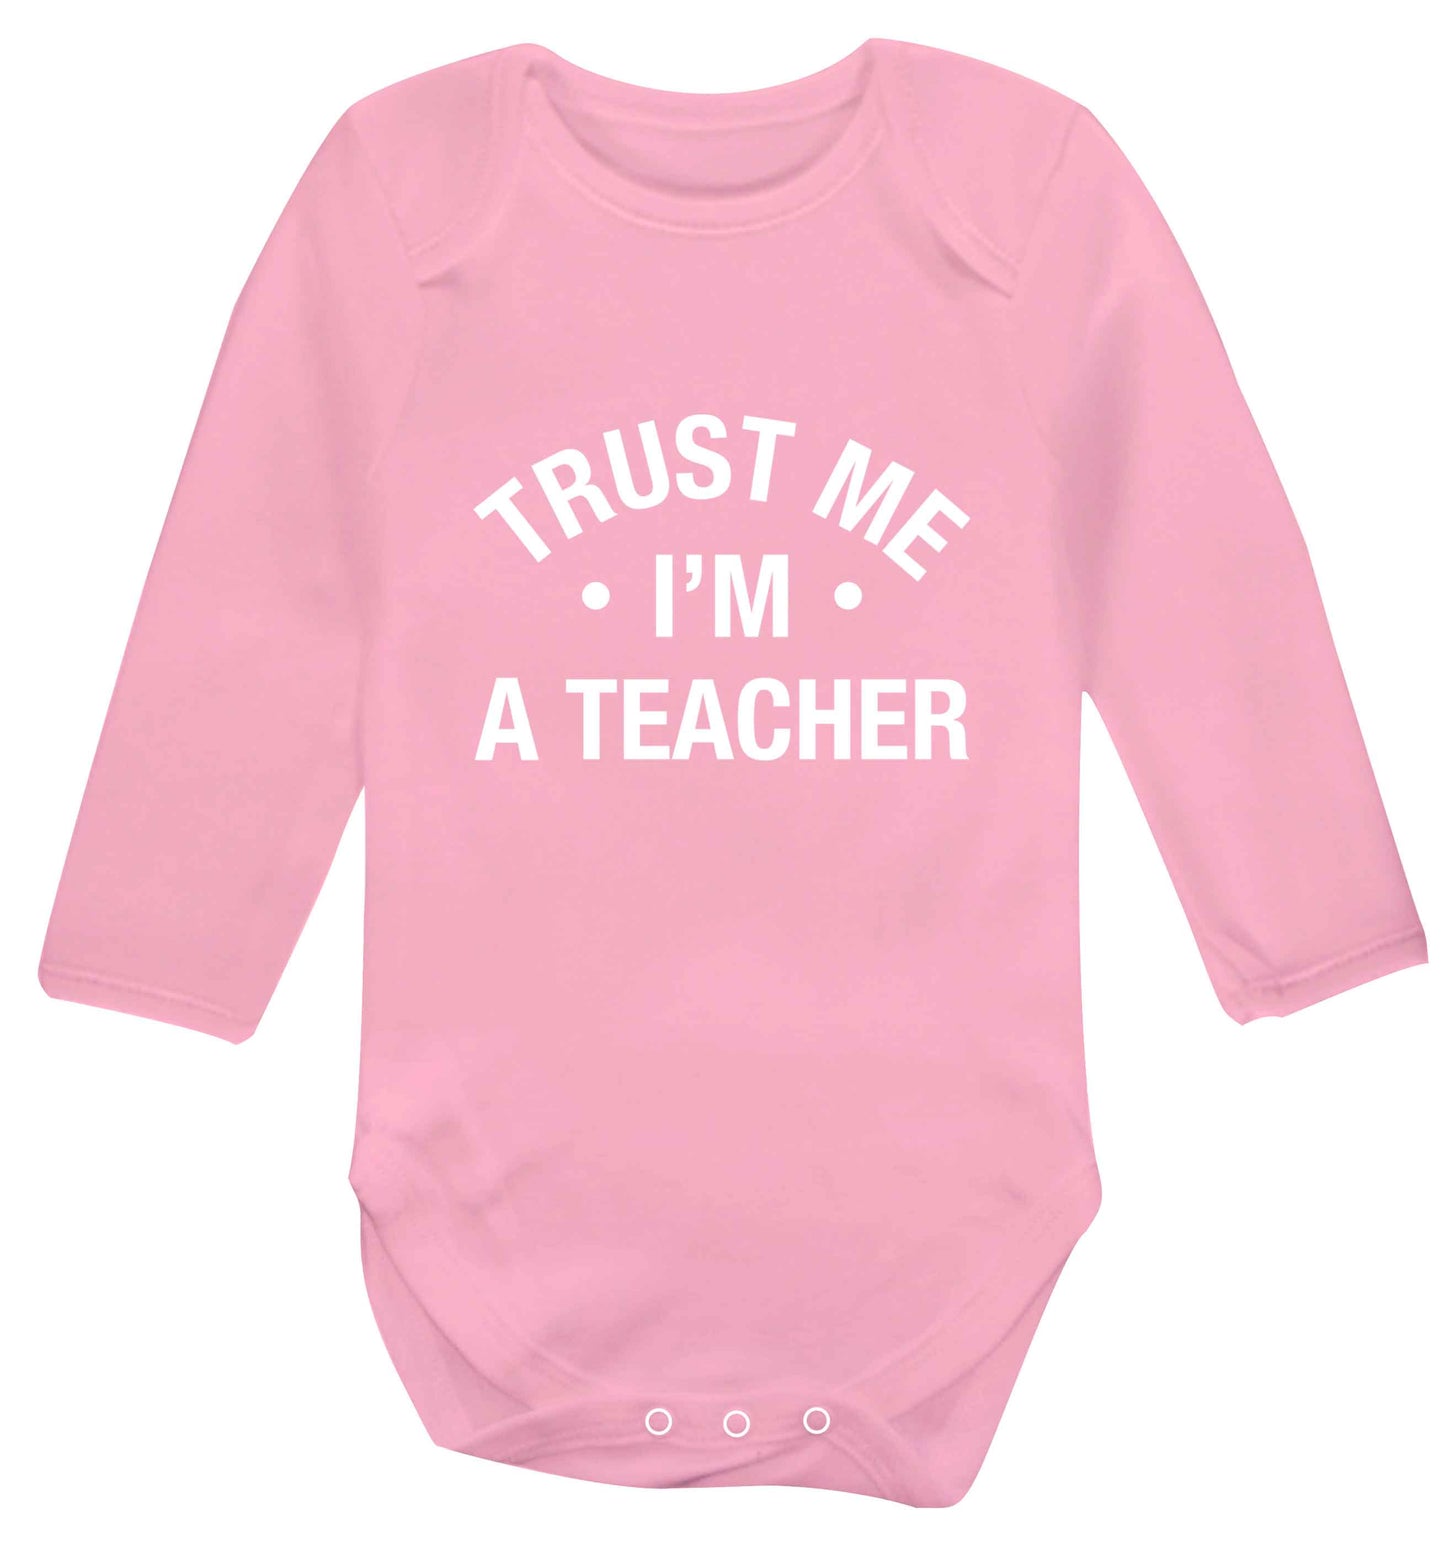 Trust me I'm a teacher baby vest long sleeved pale pink 6-12 months